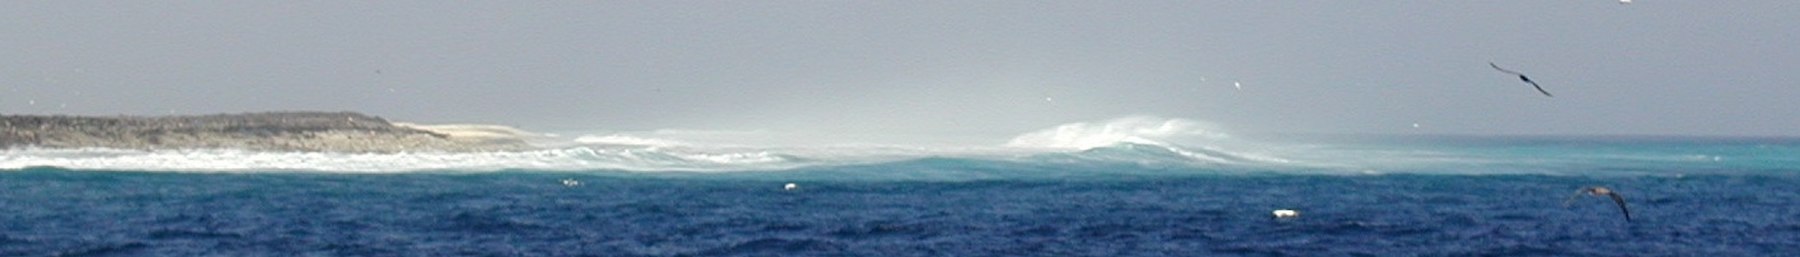 WV баннер Clipperton Waves.jpg